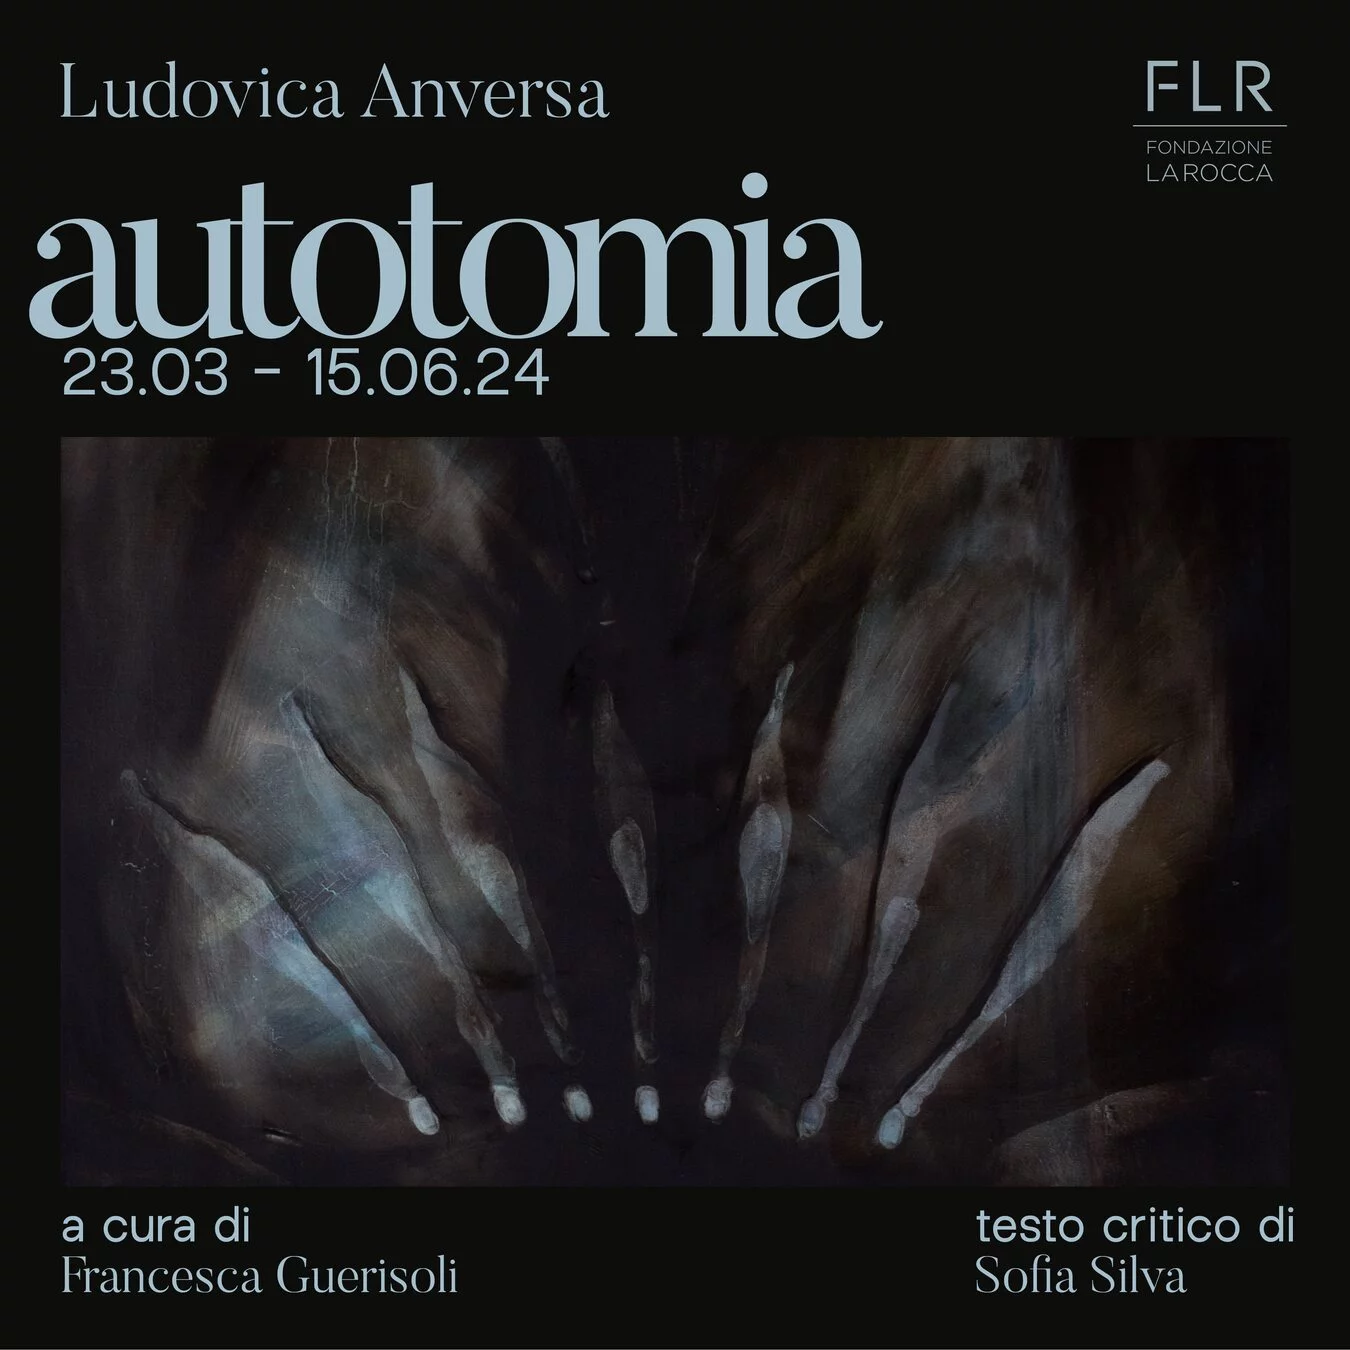 Ludovica Anversa. Autotomia